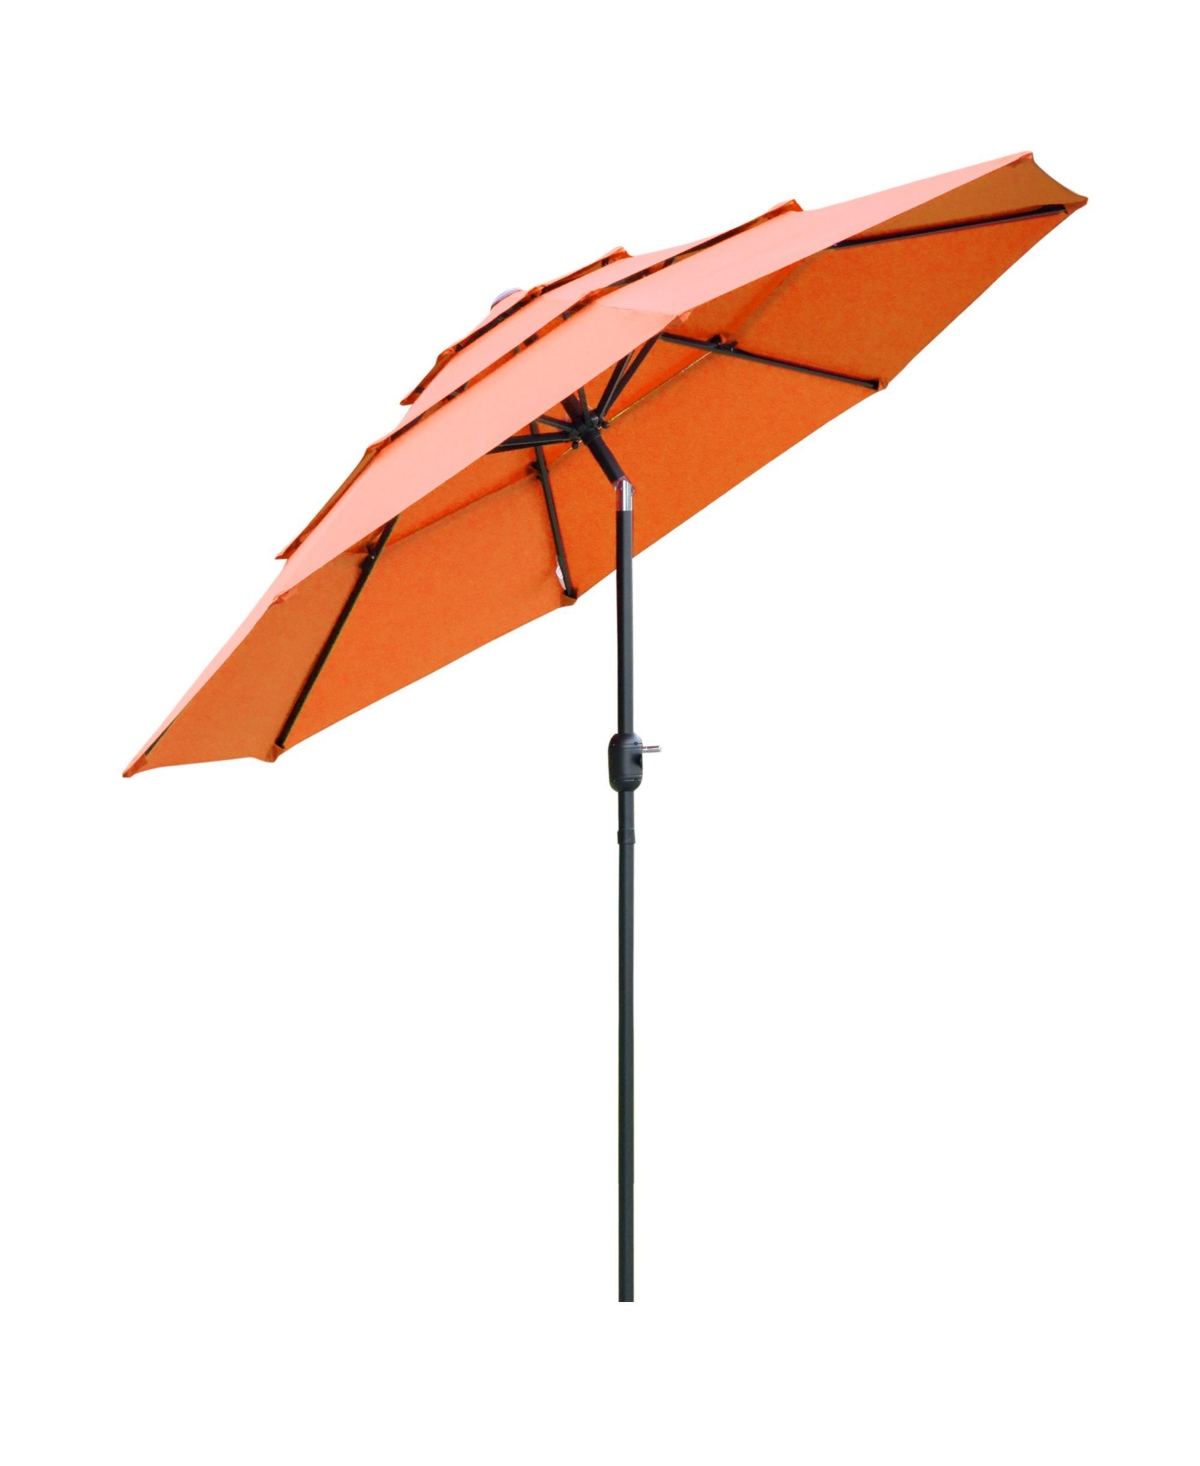 104.25" 3-Tier Patio Umbrella, Outdoor Market Umbrella with Crank and Push Button Tilt for Deck, Backyard and Lawn, Orange - Orange